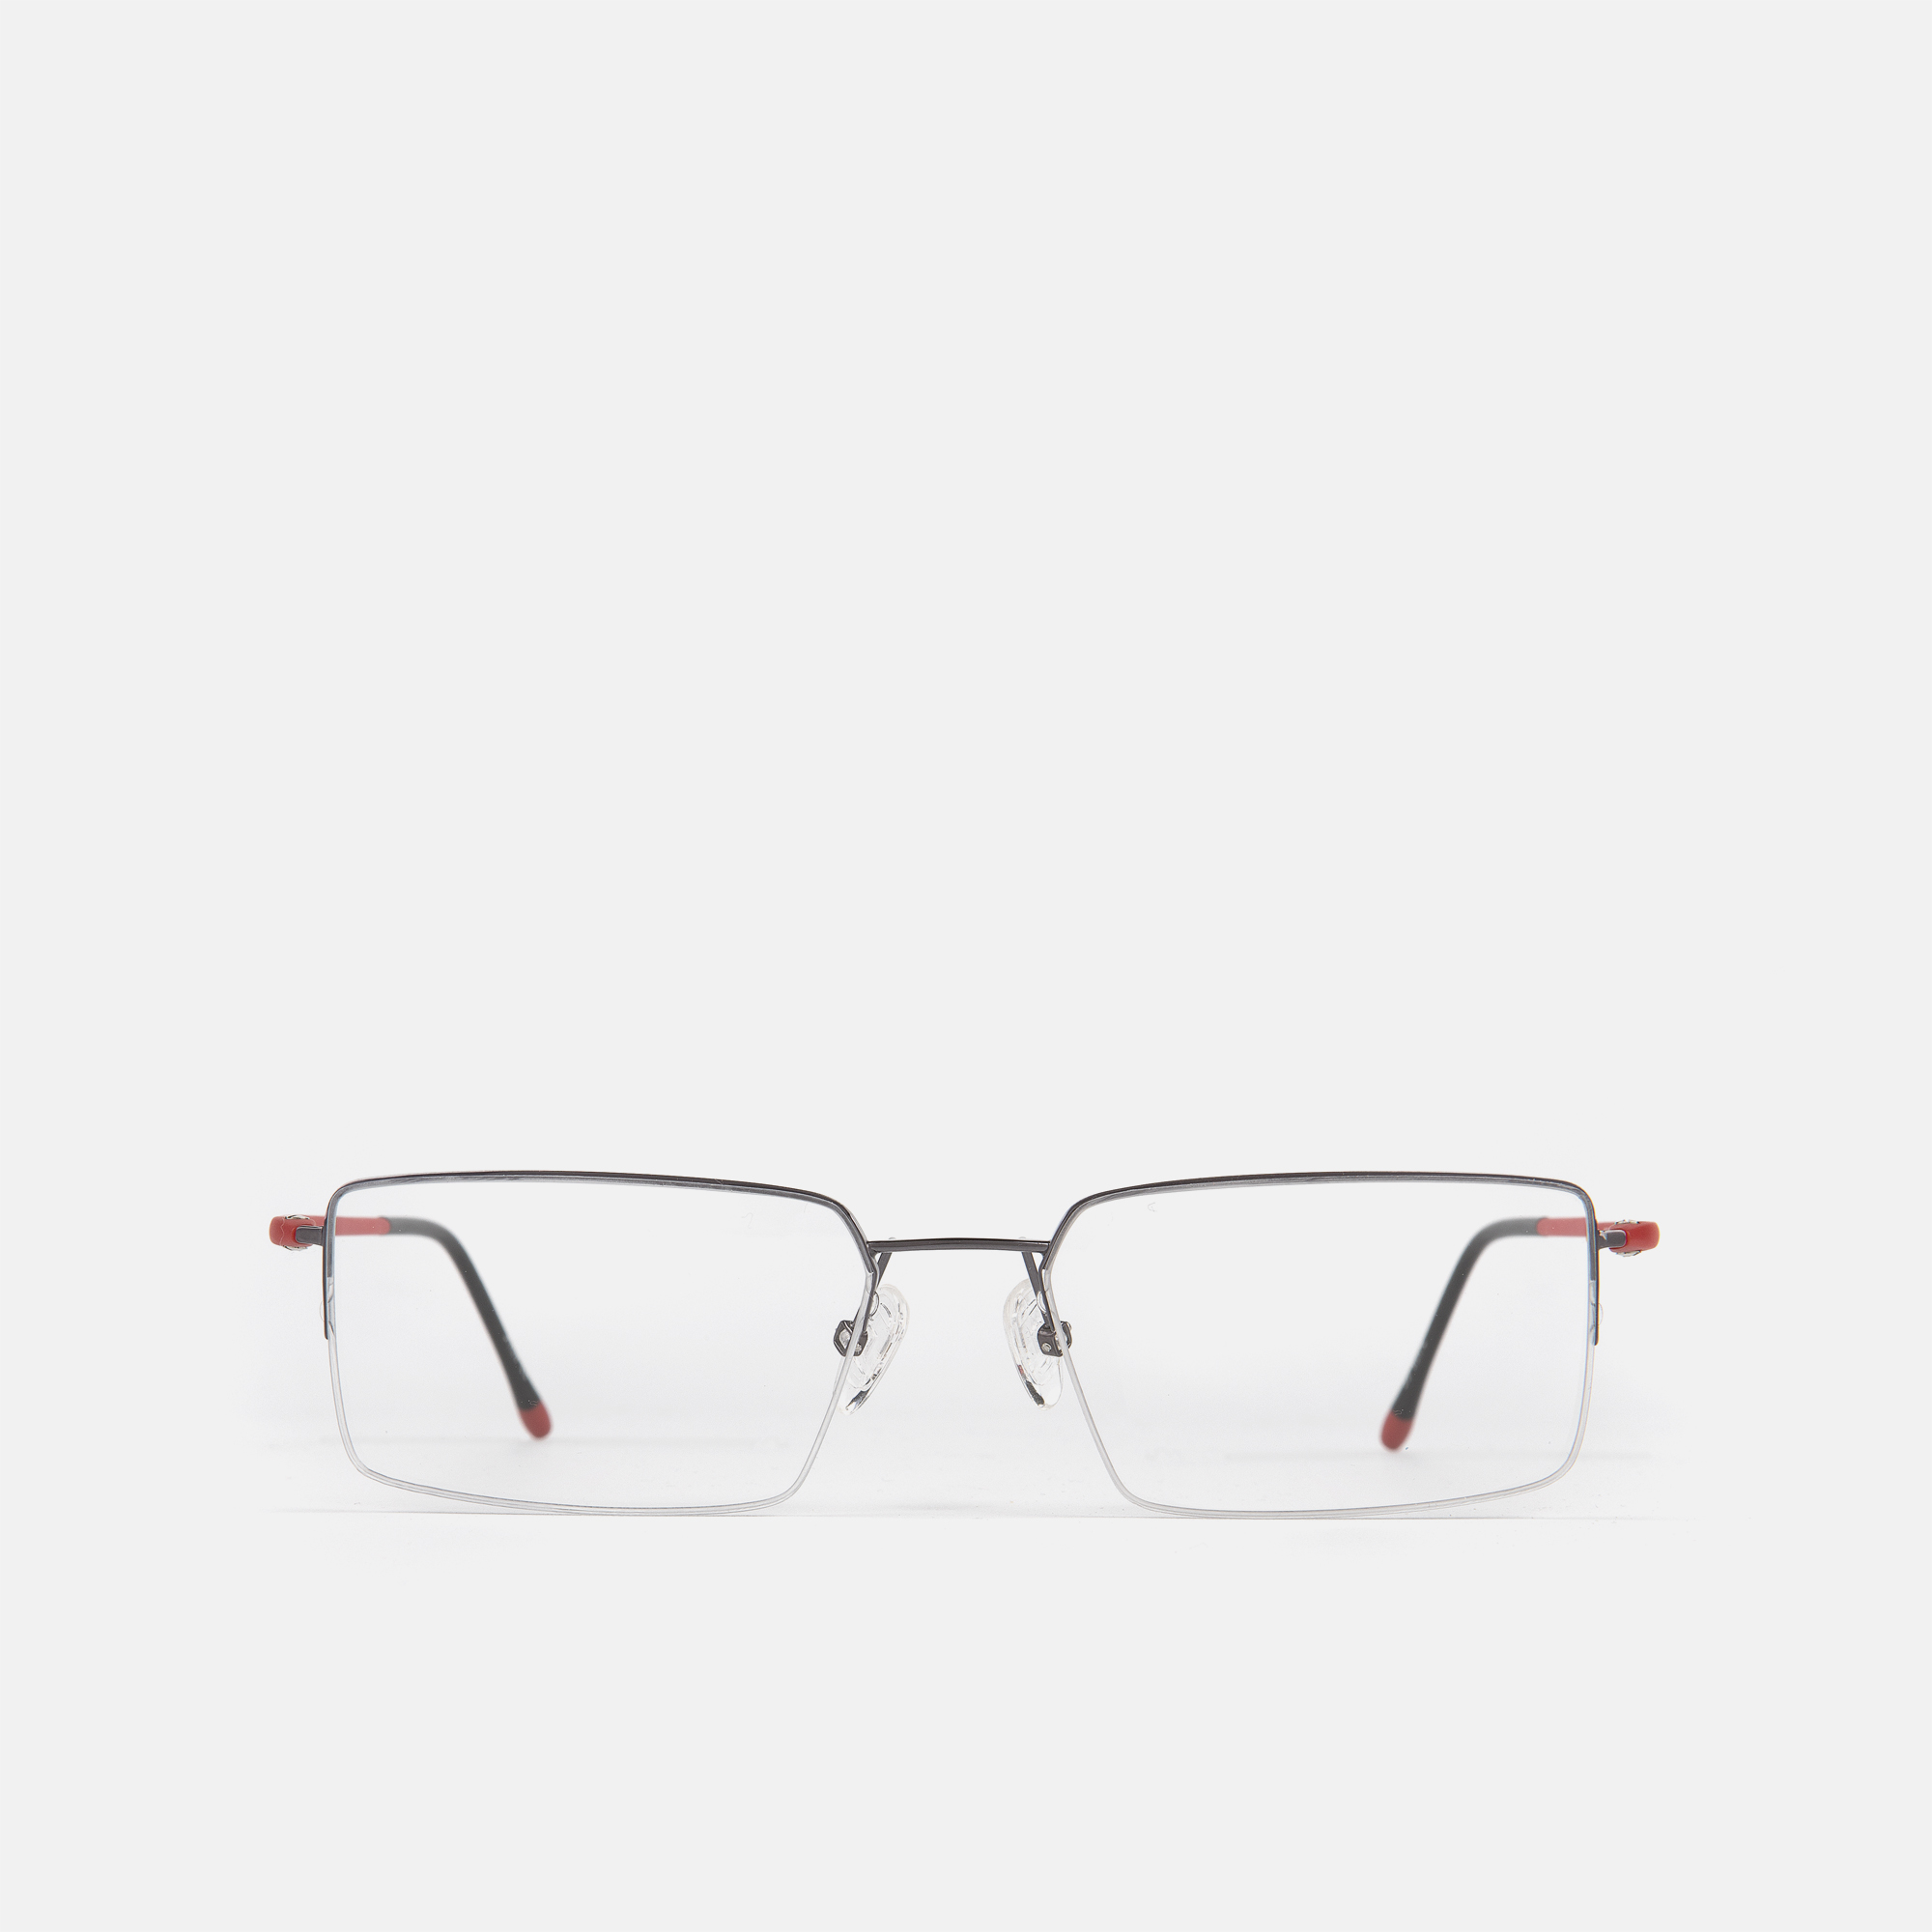 PLUS 154NY - gafas - Multiopticas